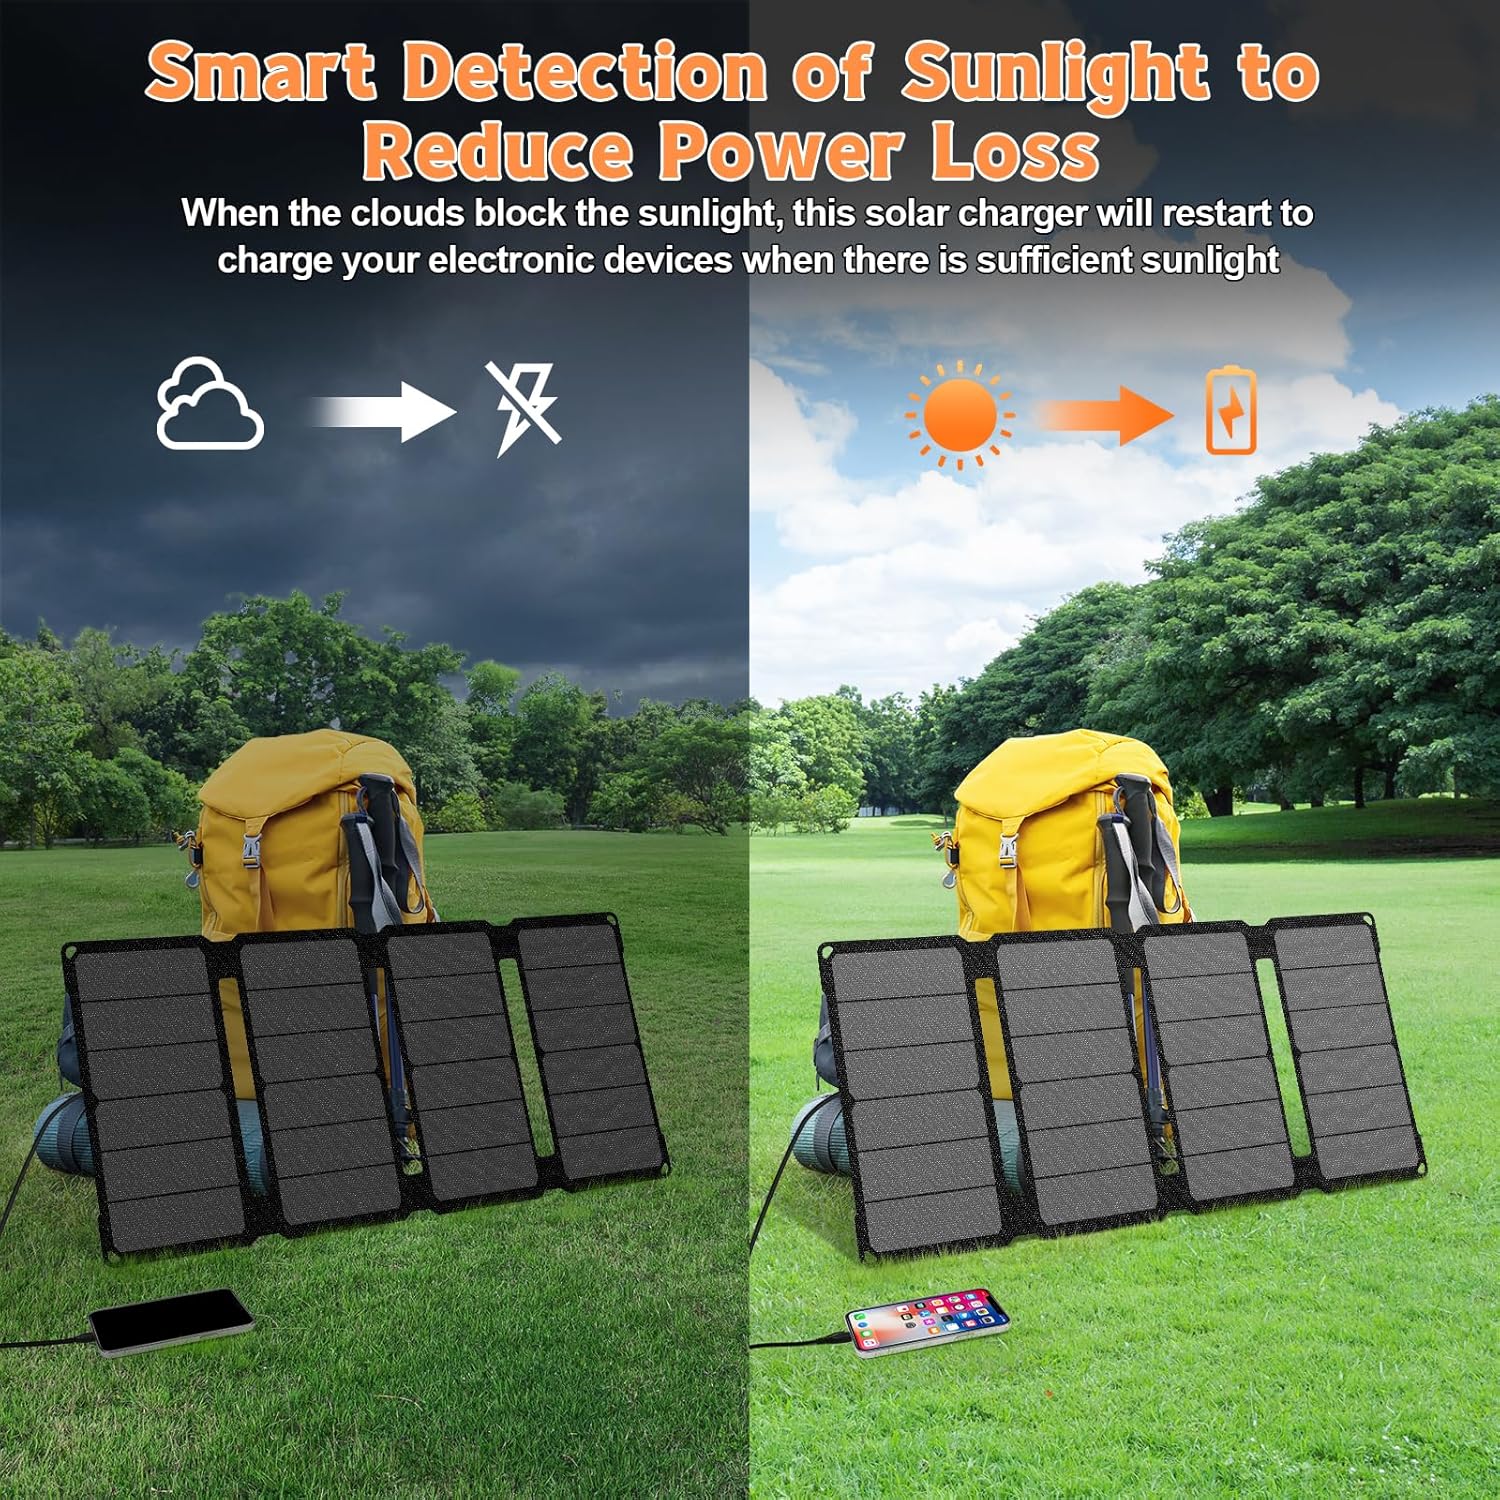 120W Portable Solar Panel Review